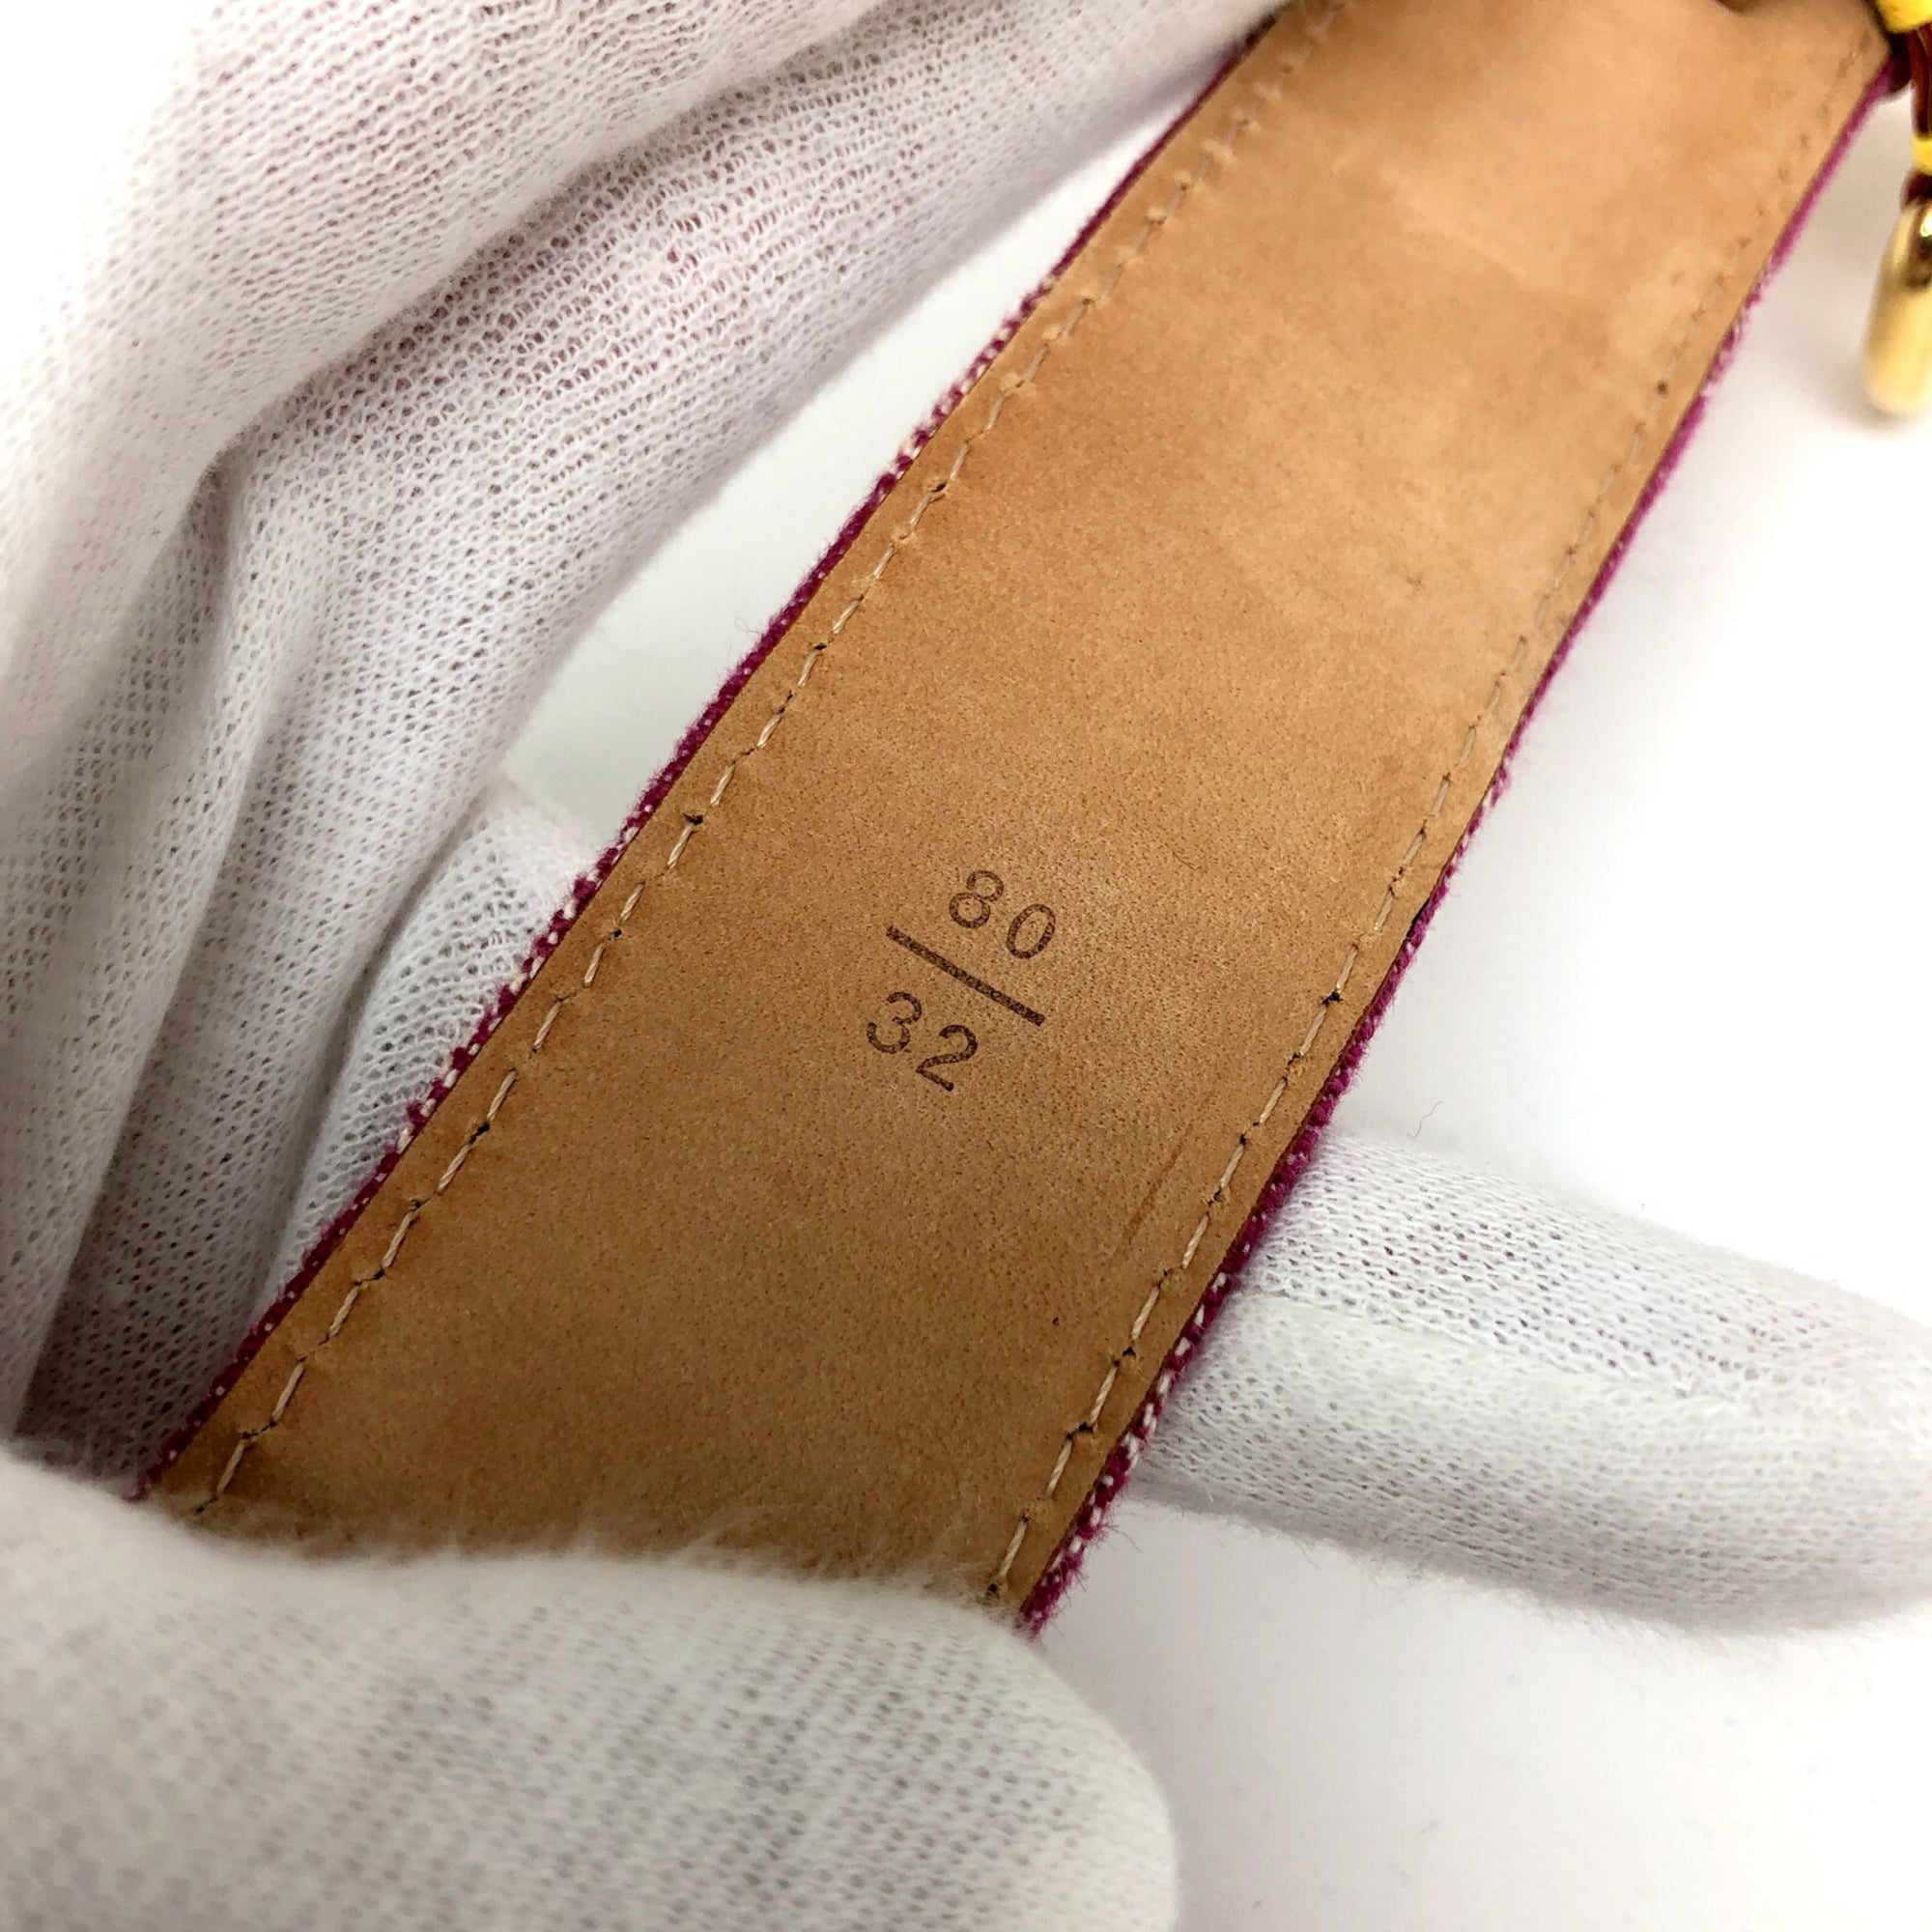 Authenticated used Louis Vuitton Louis Vuitton Belt M6925w Monogram Denim Pink Gold Metal Fittings Leather Women's, Adult Unisex, Size: Length: 95cm /